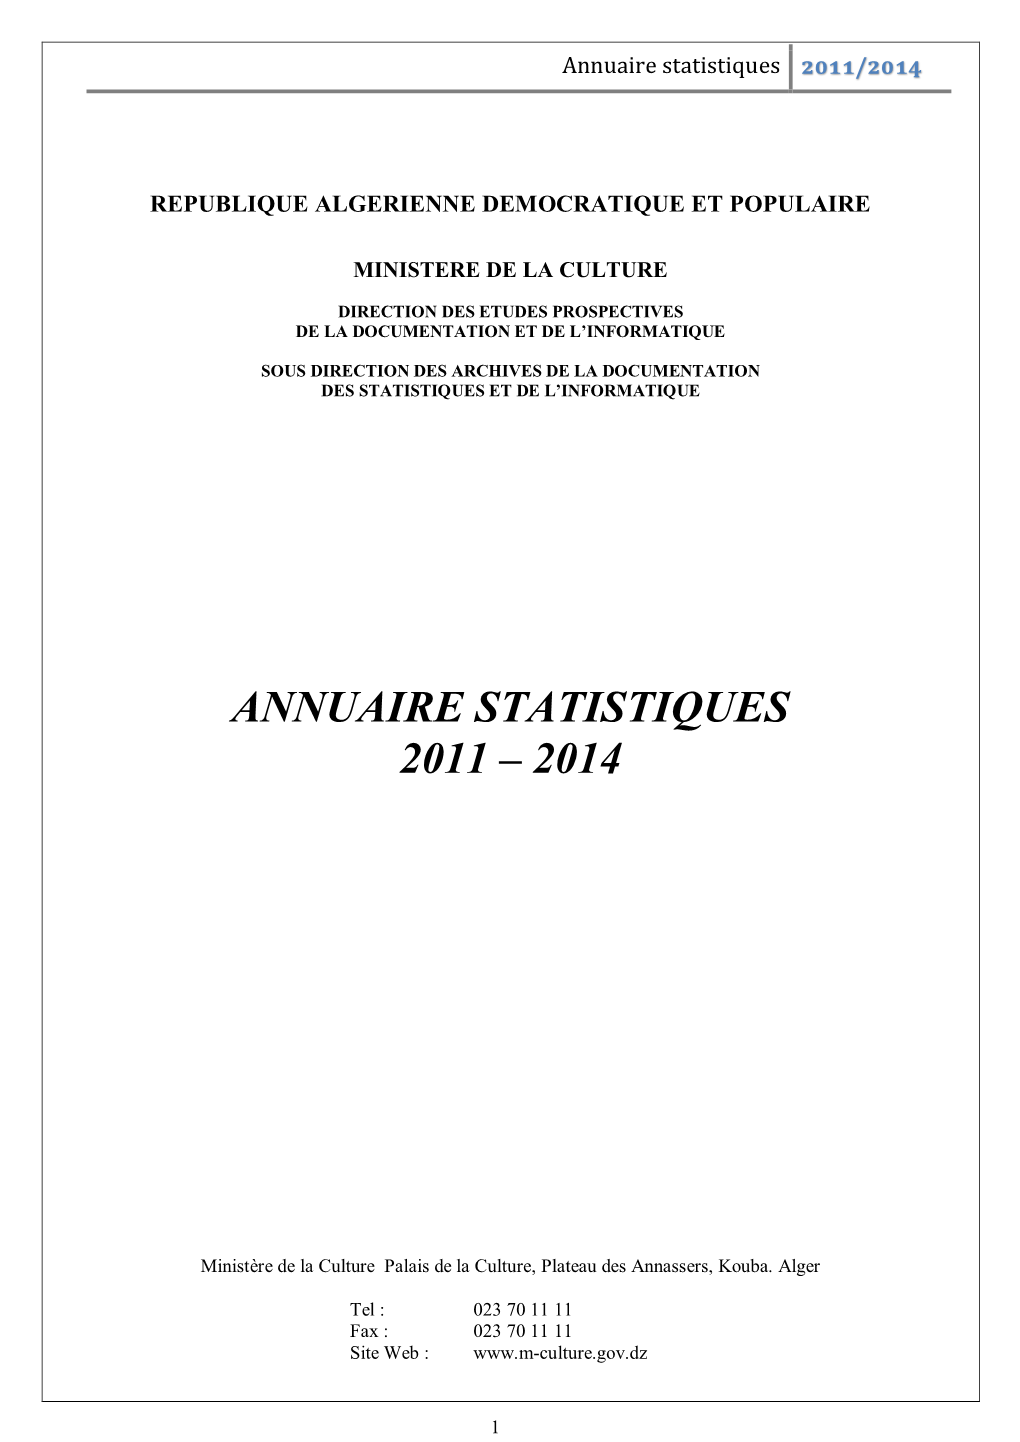 Annuaire Statistiques 2011/2014